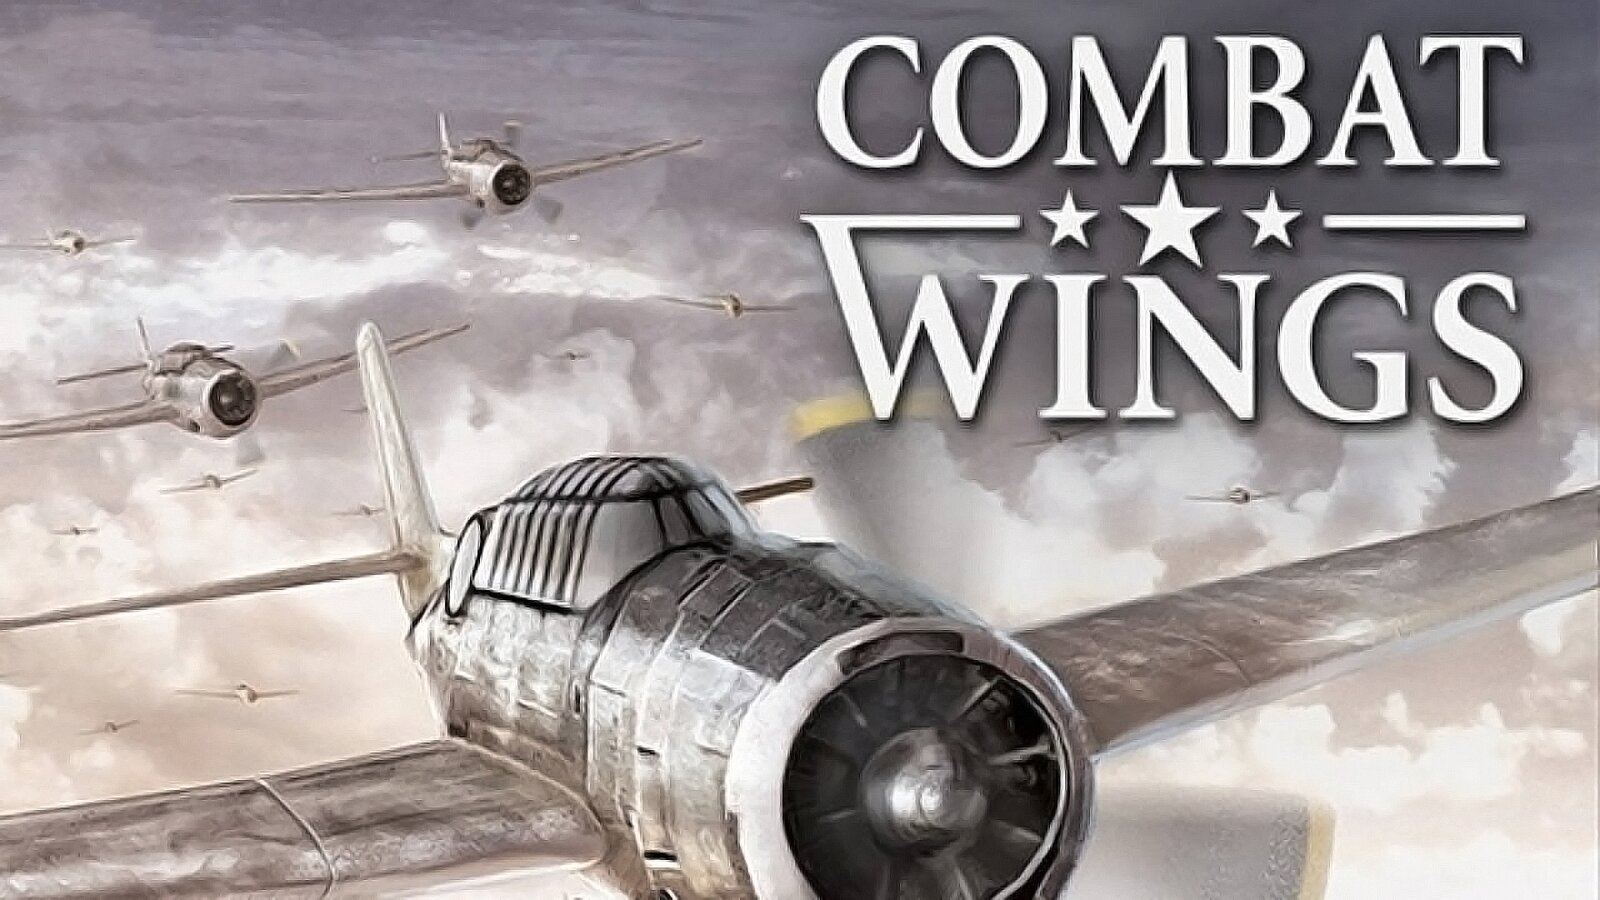 Combat Wings